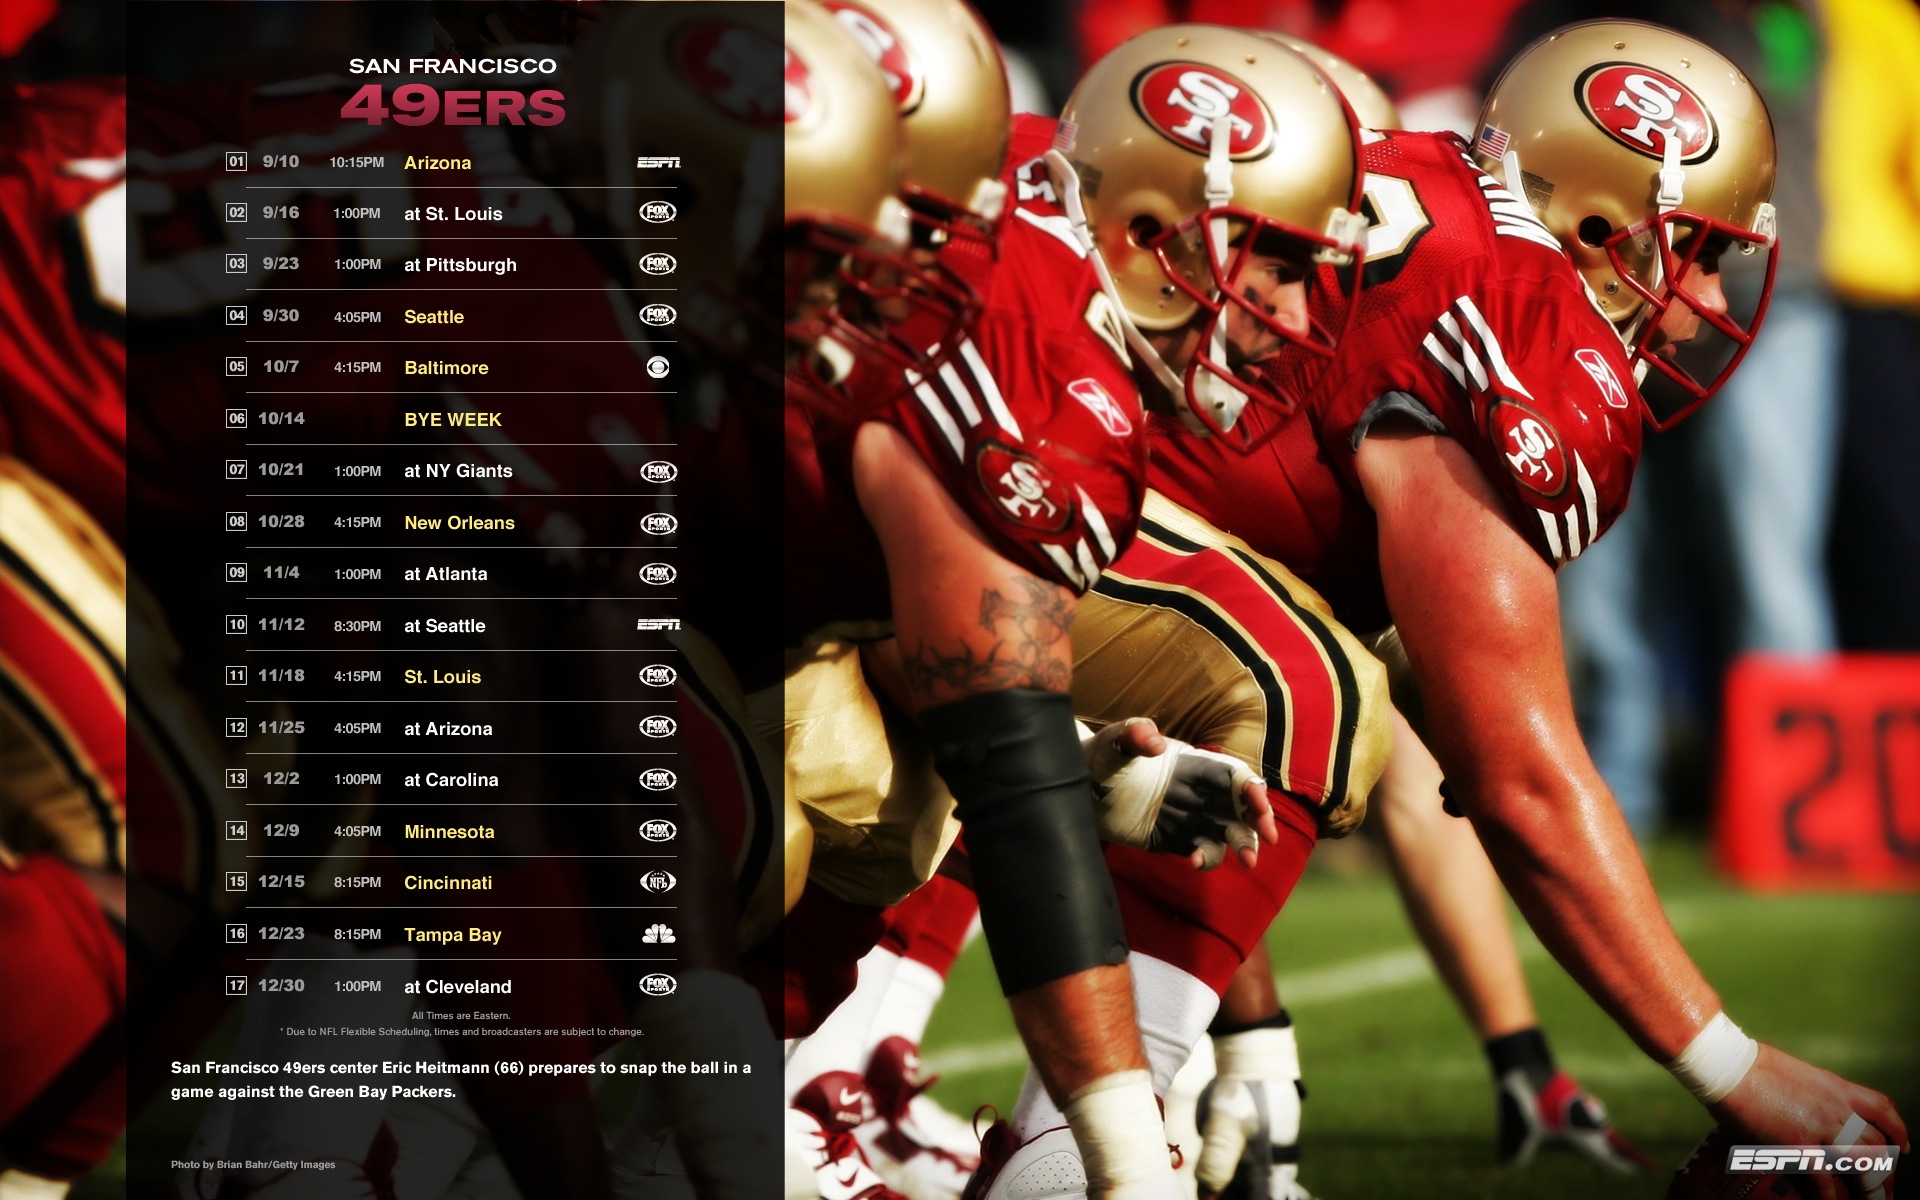 Download San Francisco 49ers wallpaper eric heitmann 49ers